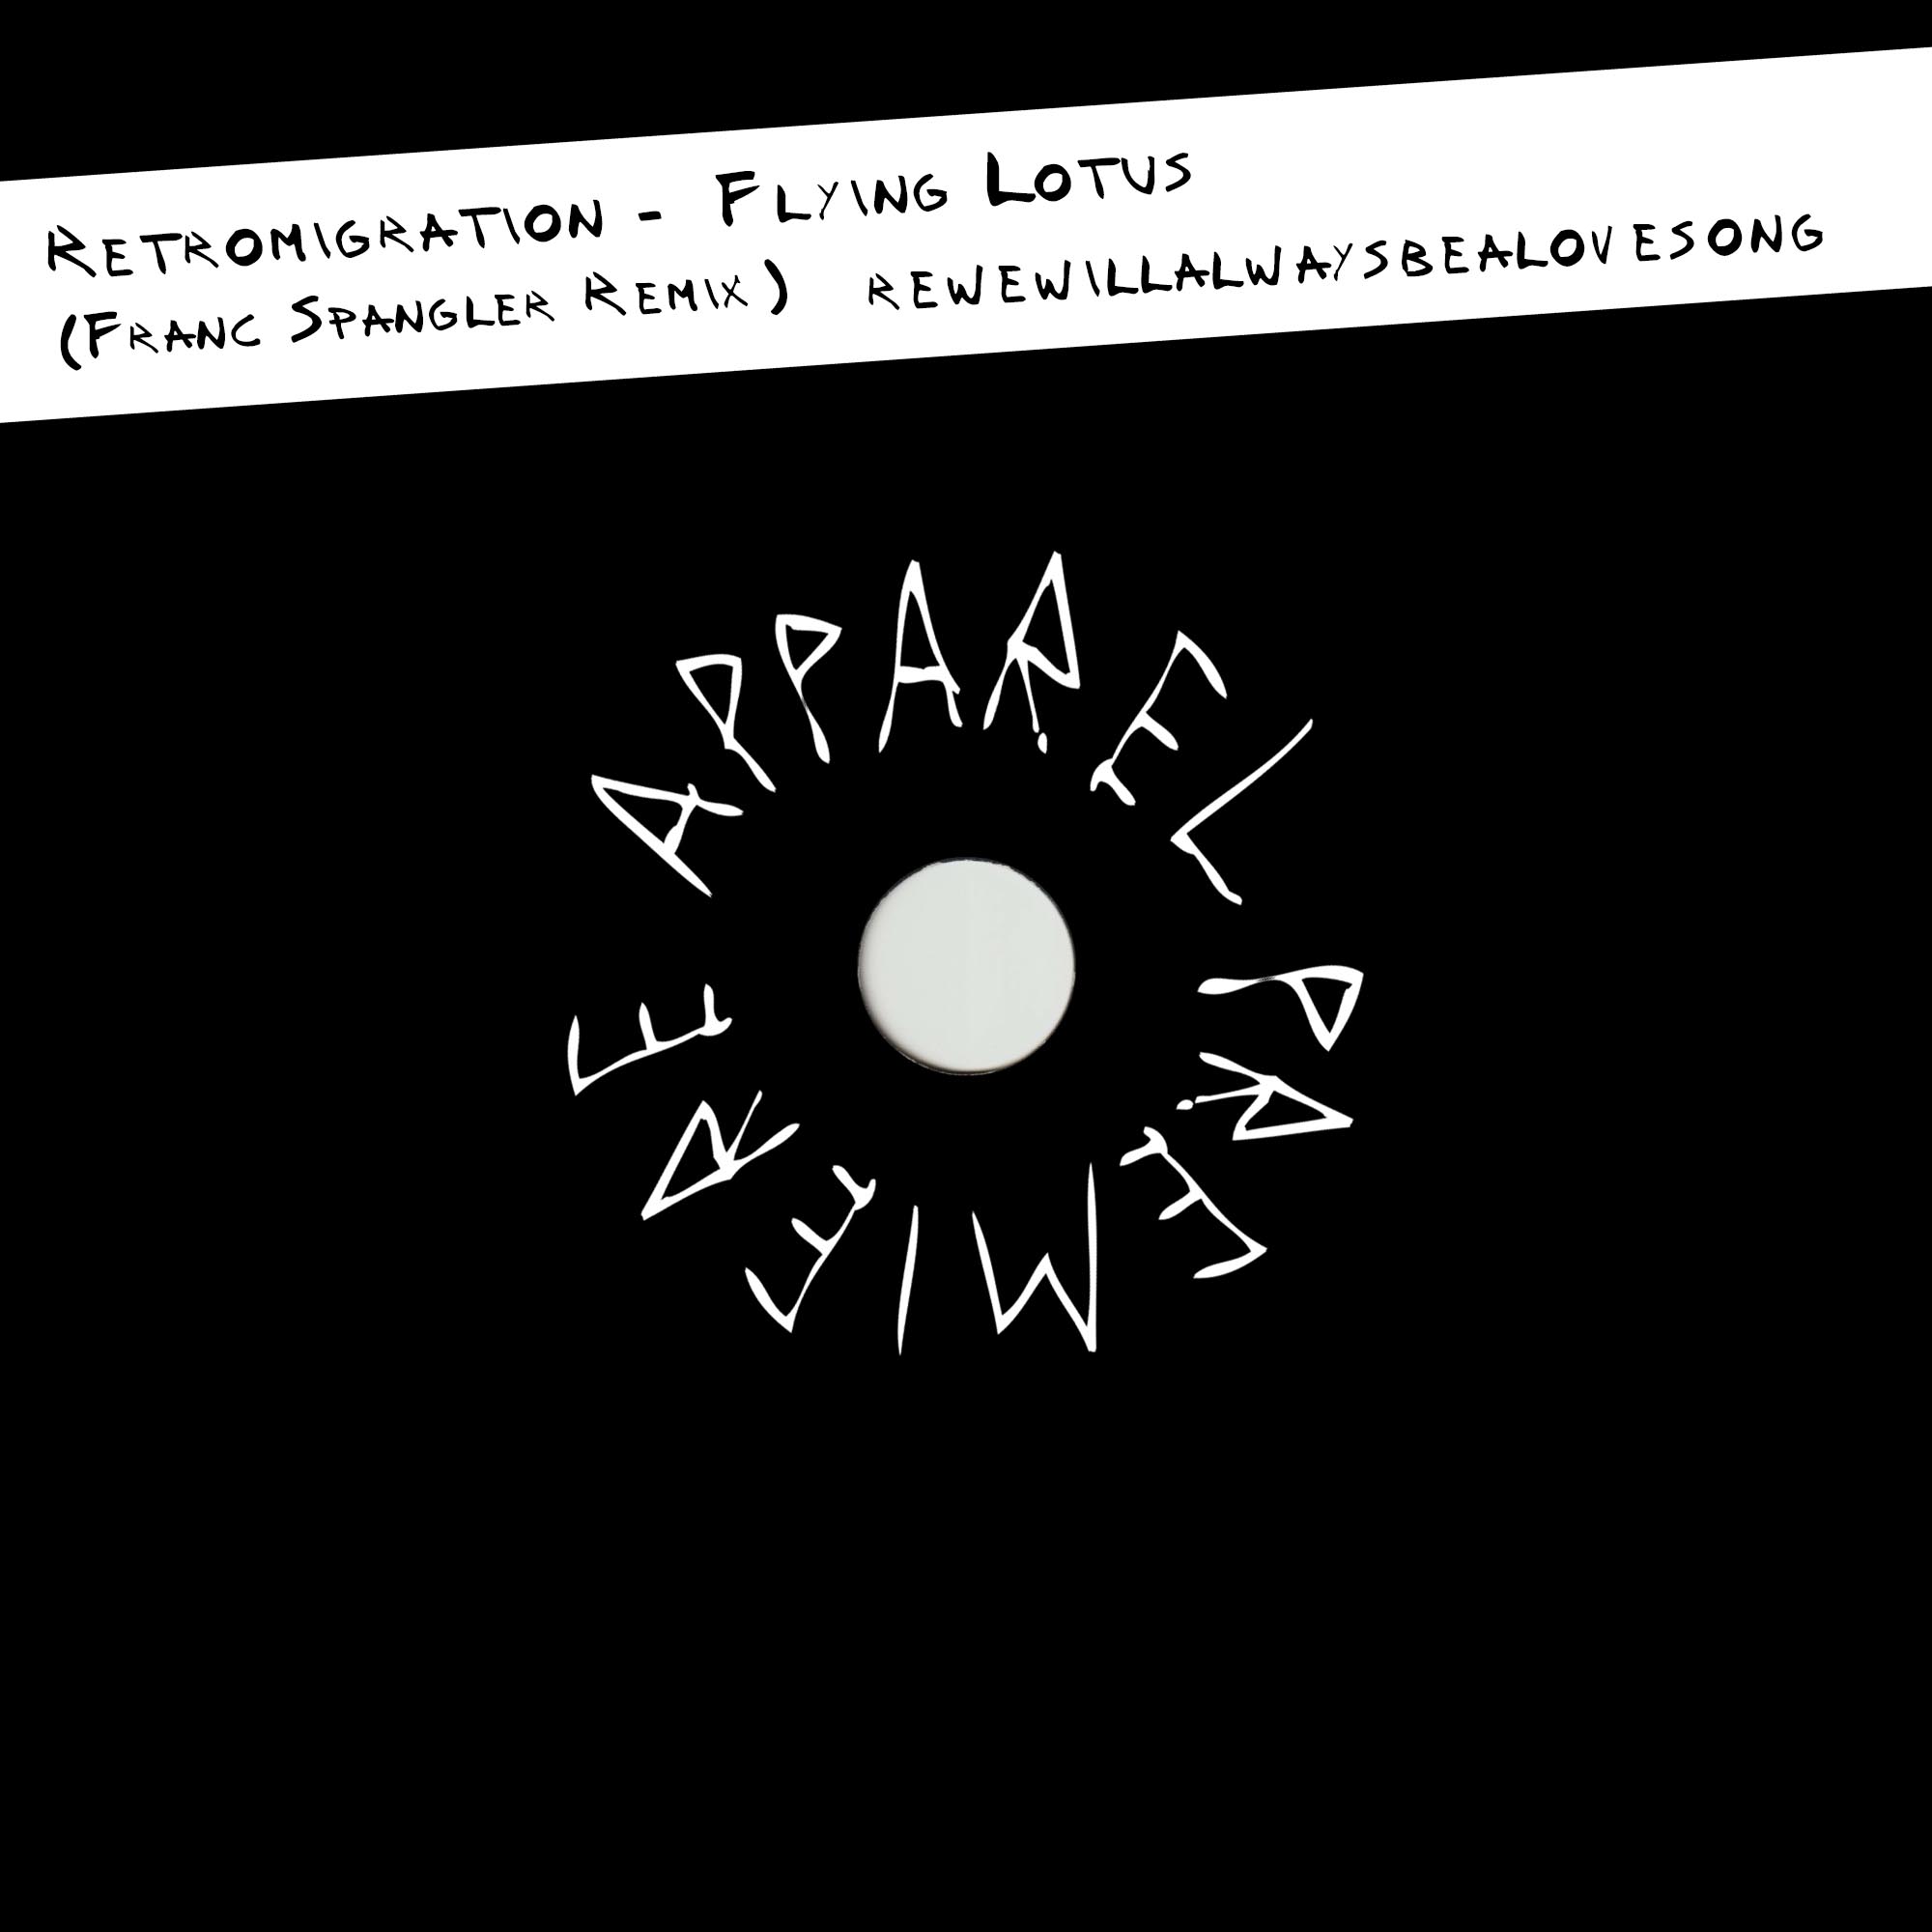 APPAREL PREMIERE Retromigration – Flying Lotus (Franc Spangler Remix) [wewillalwaysbealovesong]